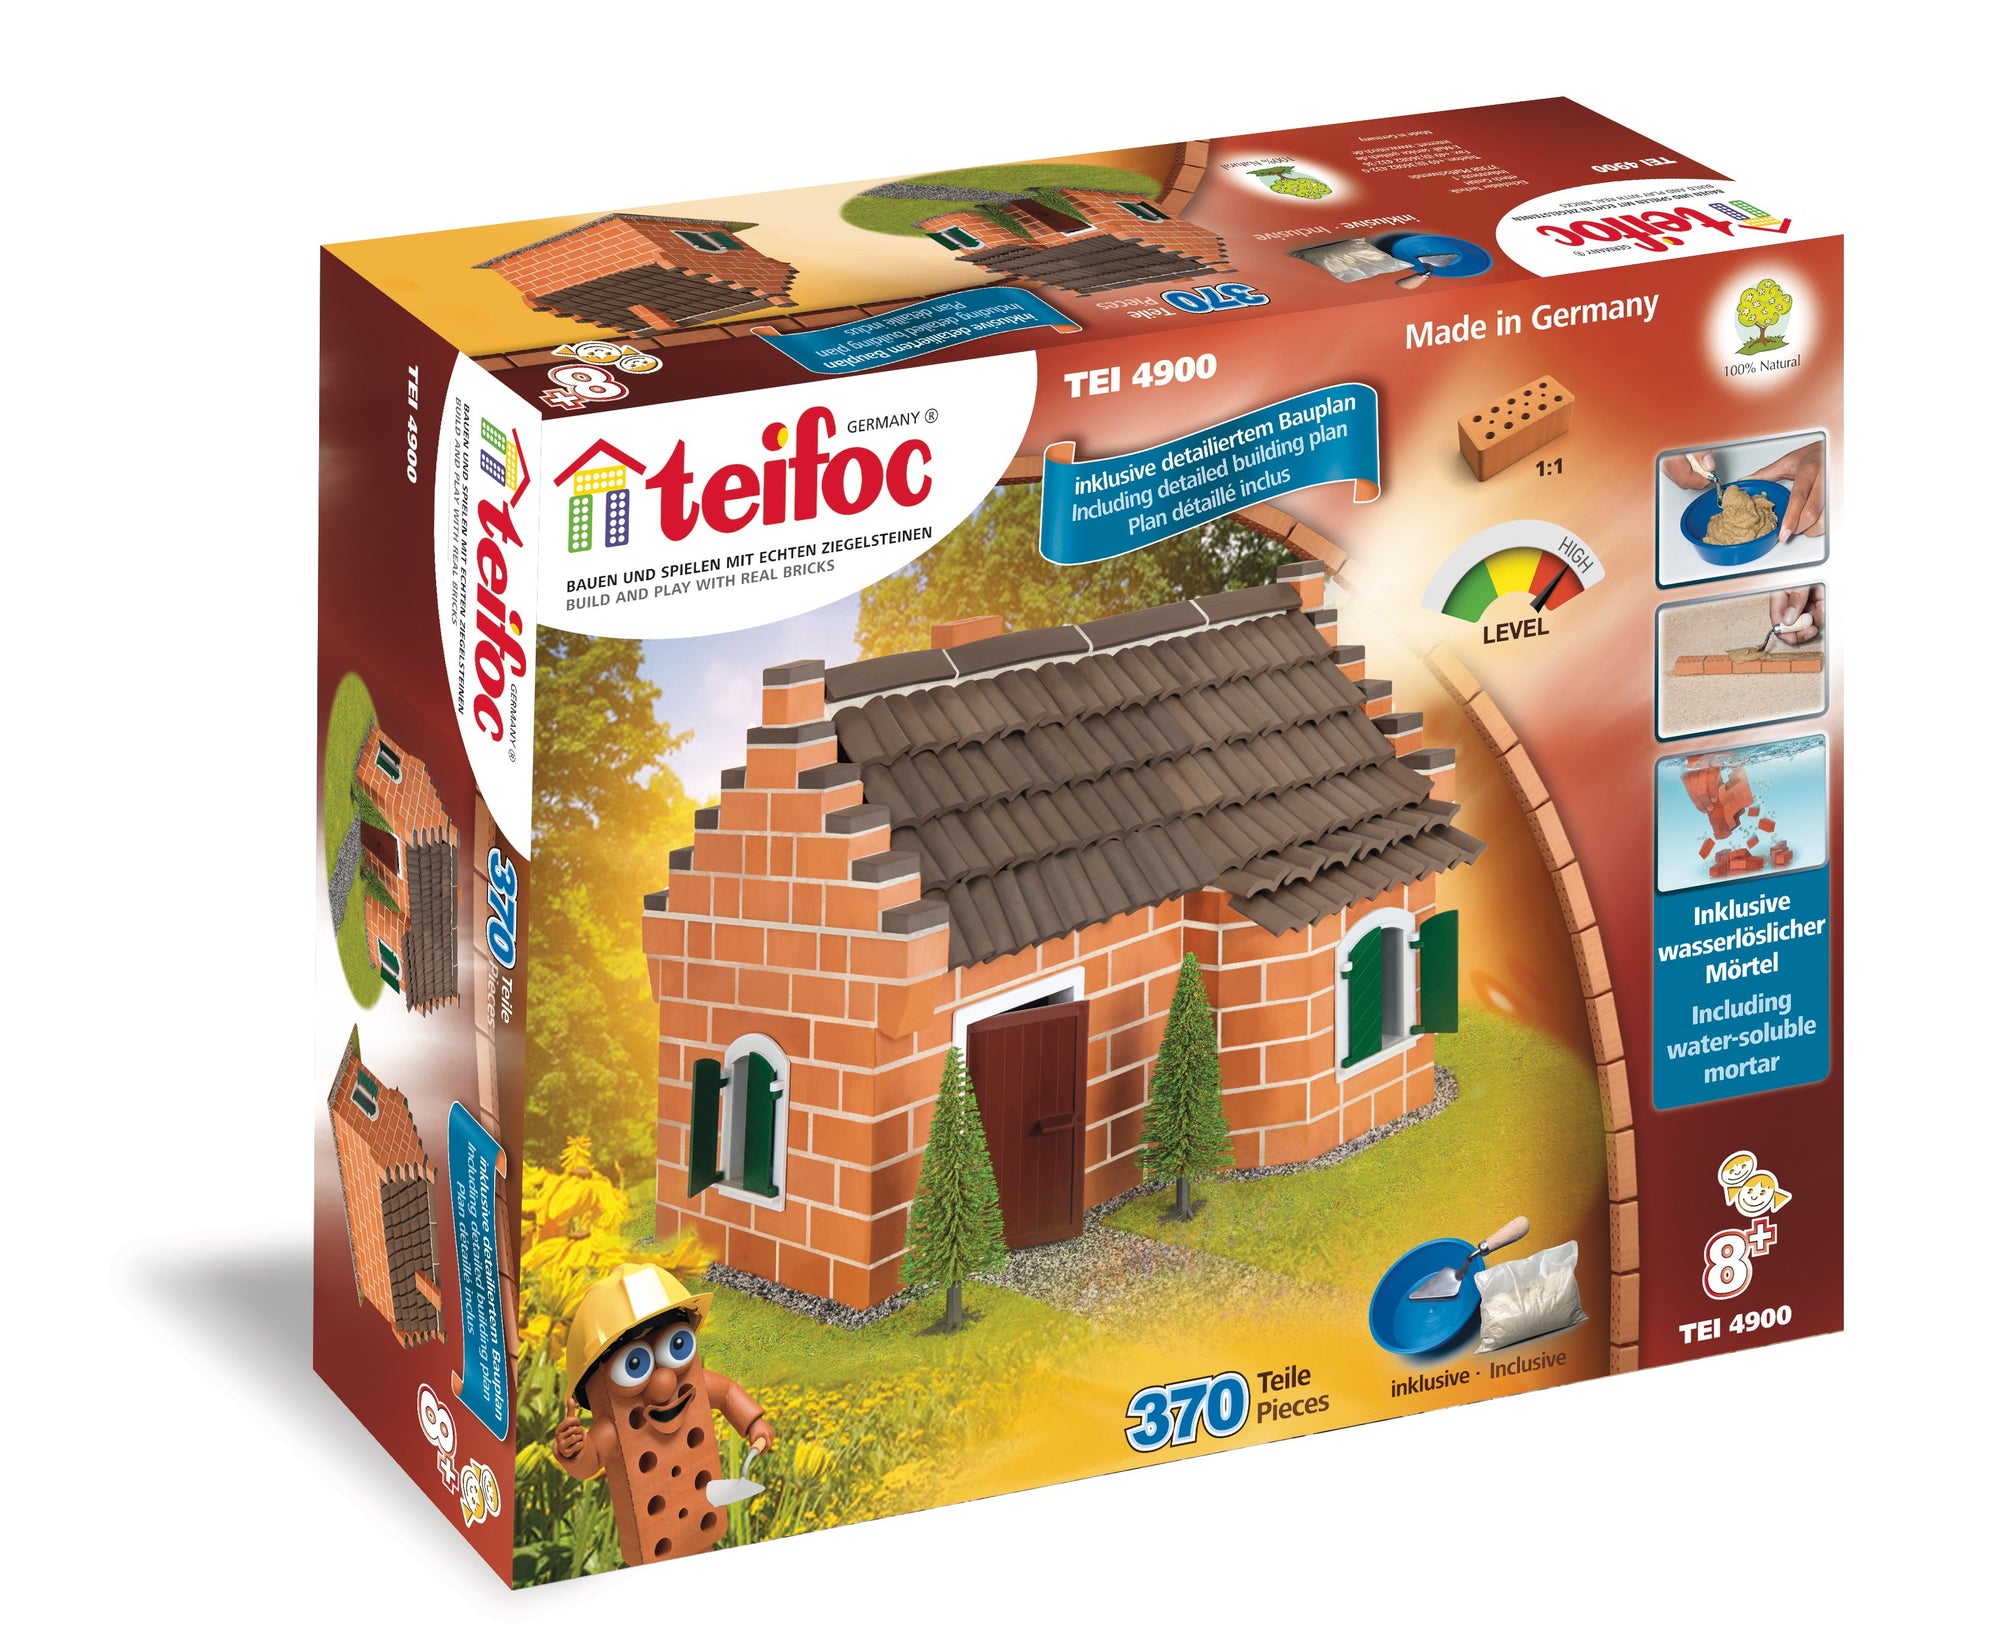 Teifoc Farm Building Brick Set Construction Toy Real Brick